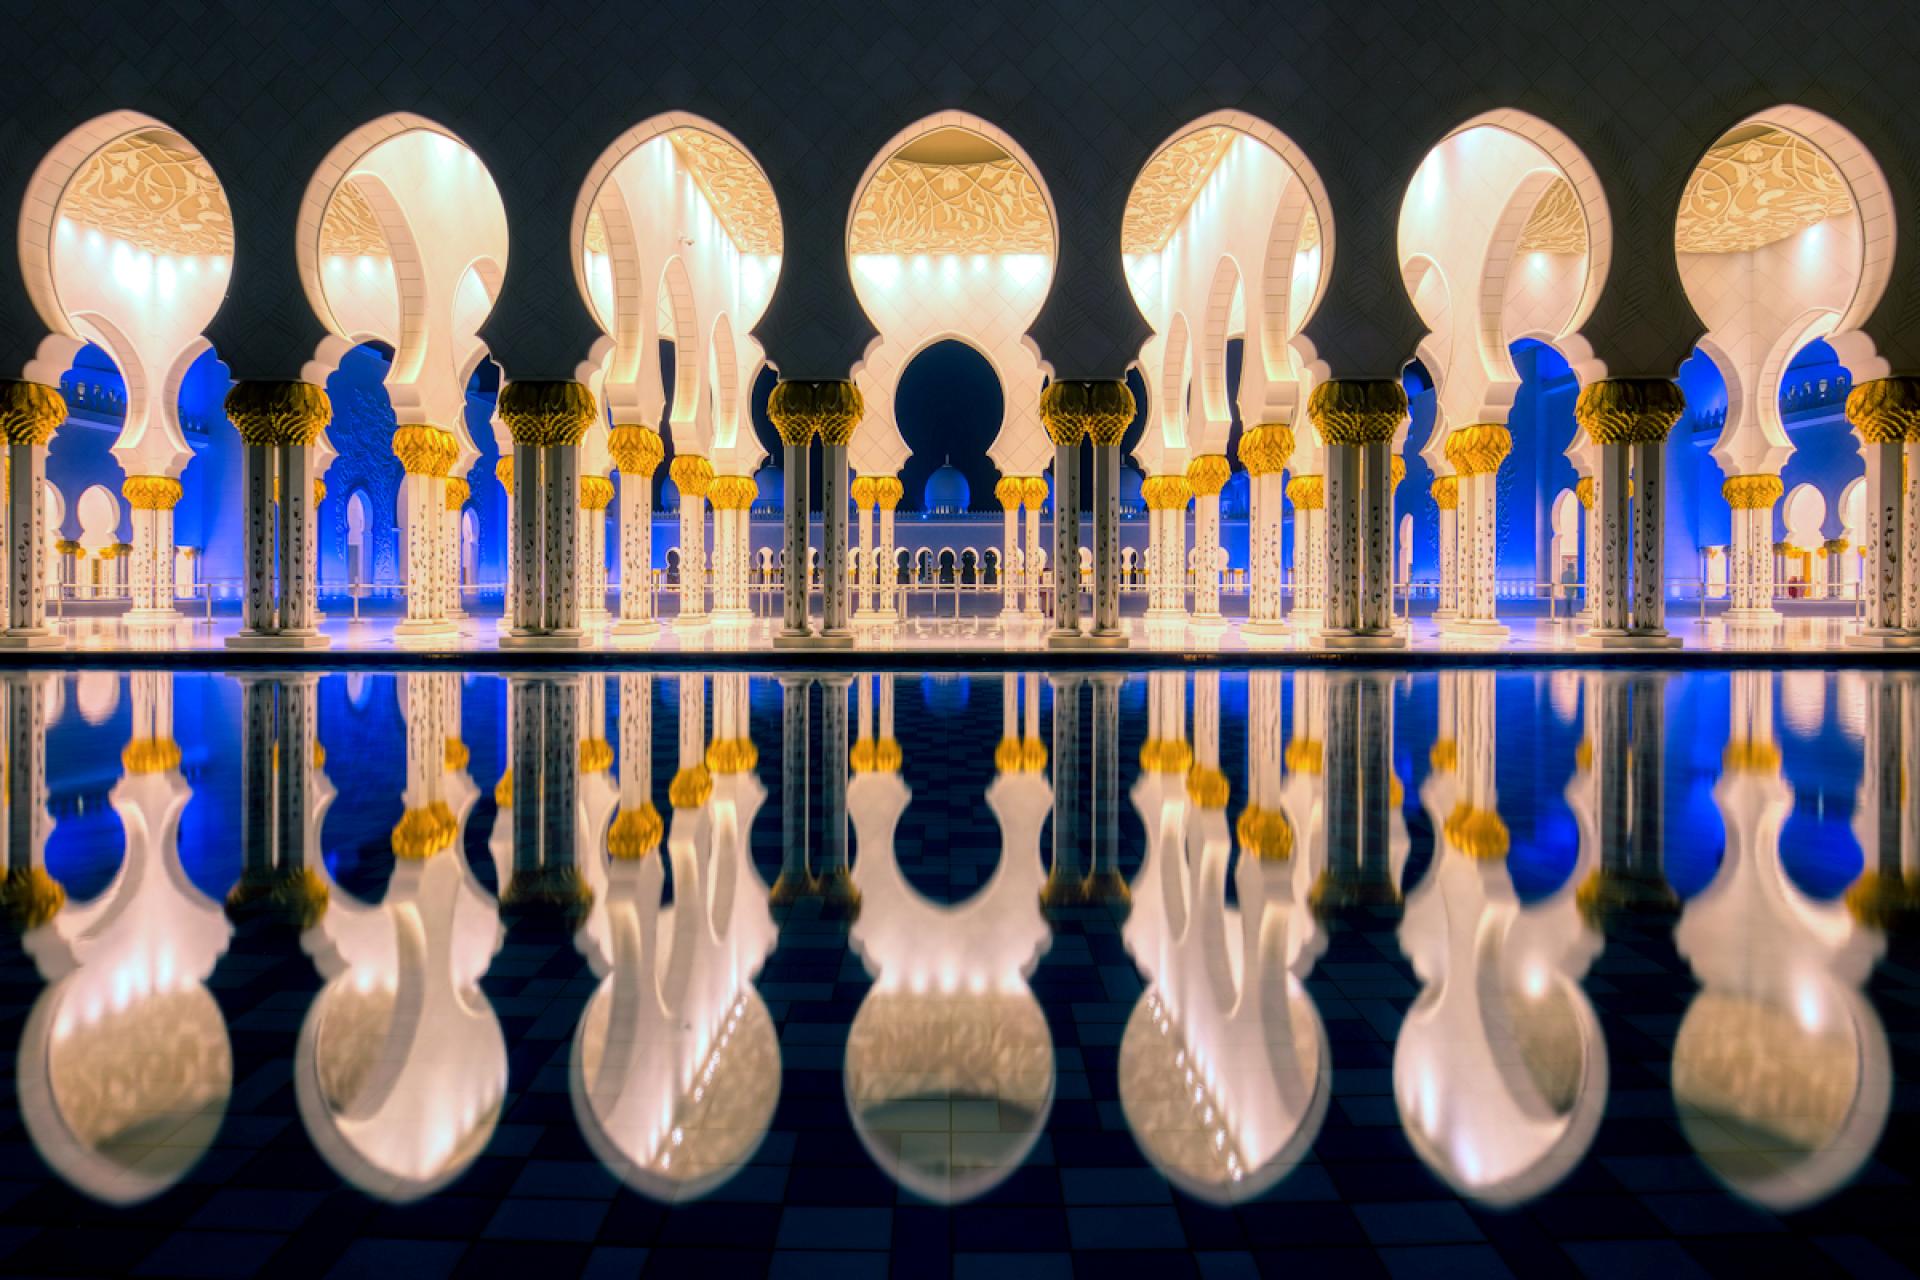 London Photography Awards Winner - Sheikh Zayed Mosque